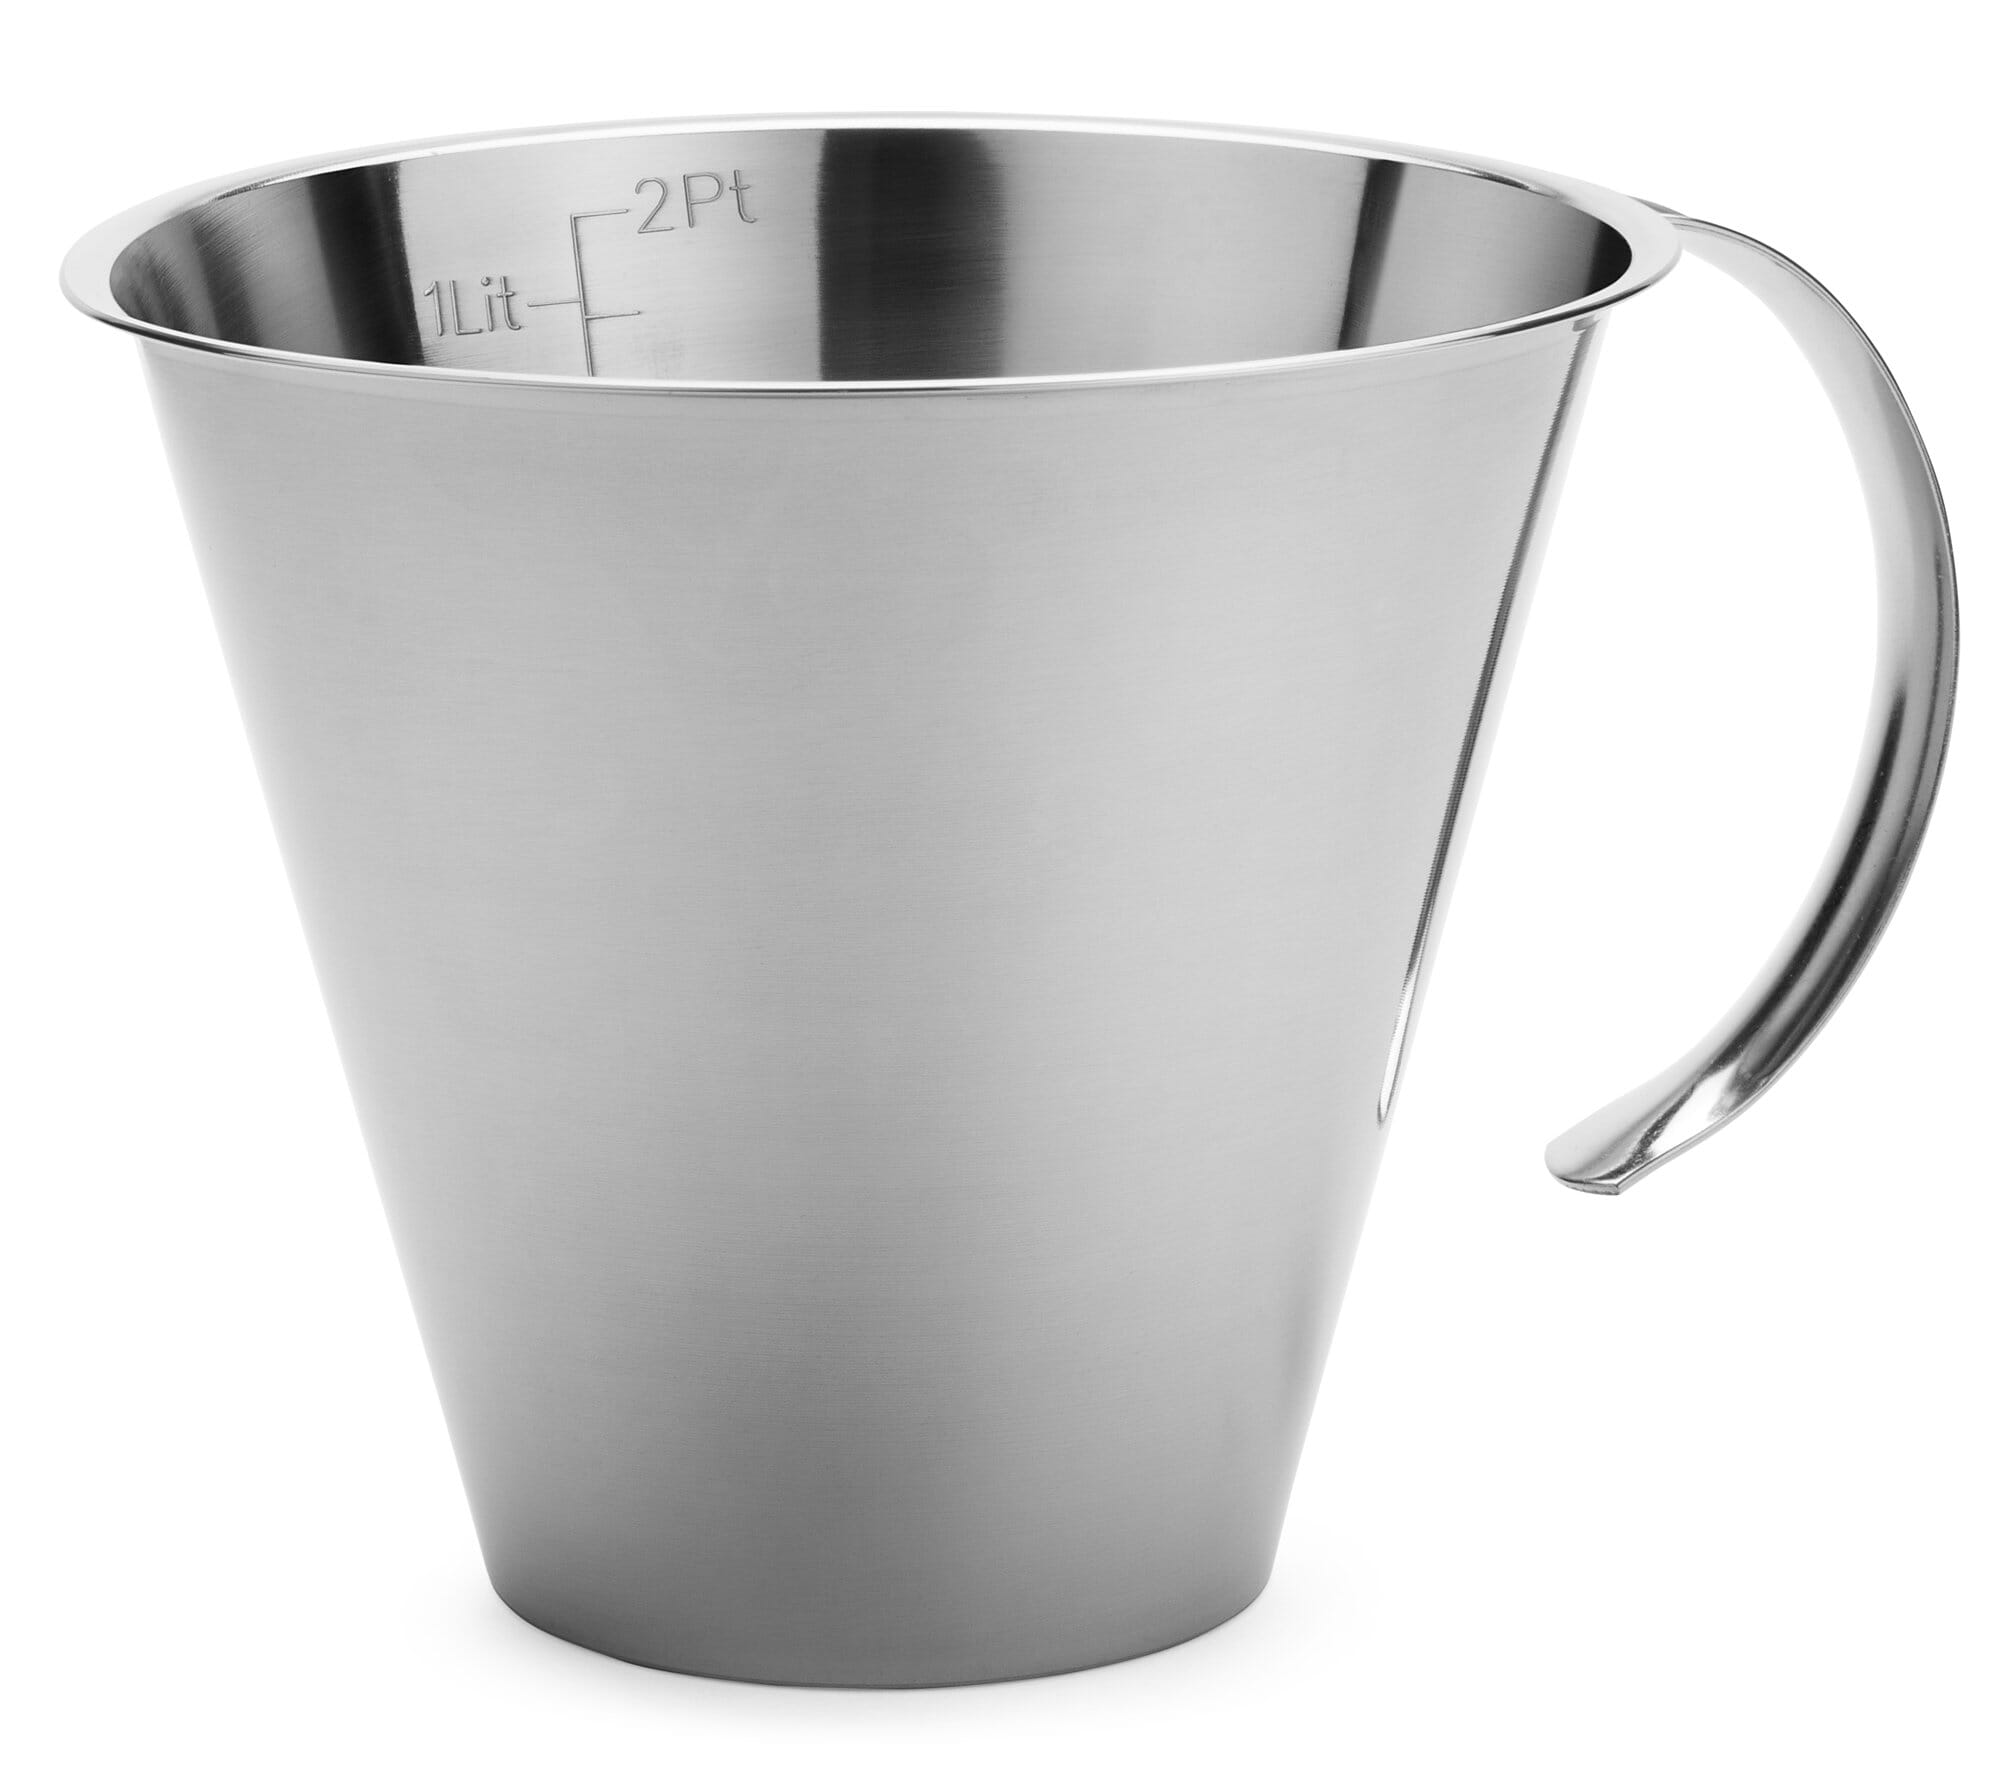 https://assets.manufactum.de/p/067/067025/67025_01.jpg/measuring-cup-stainless-steel.jpg